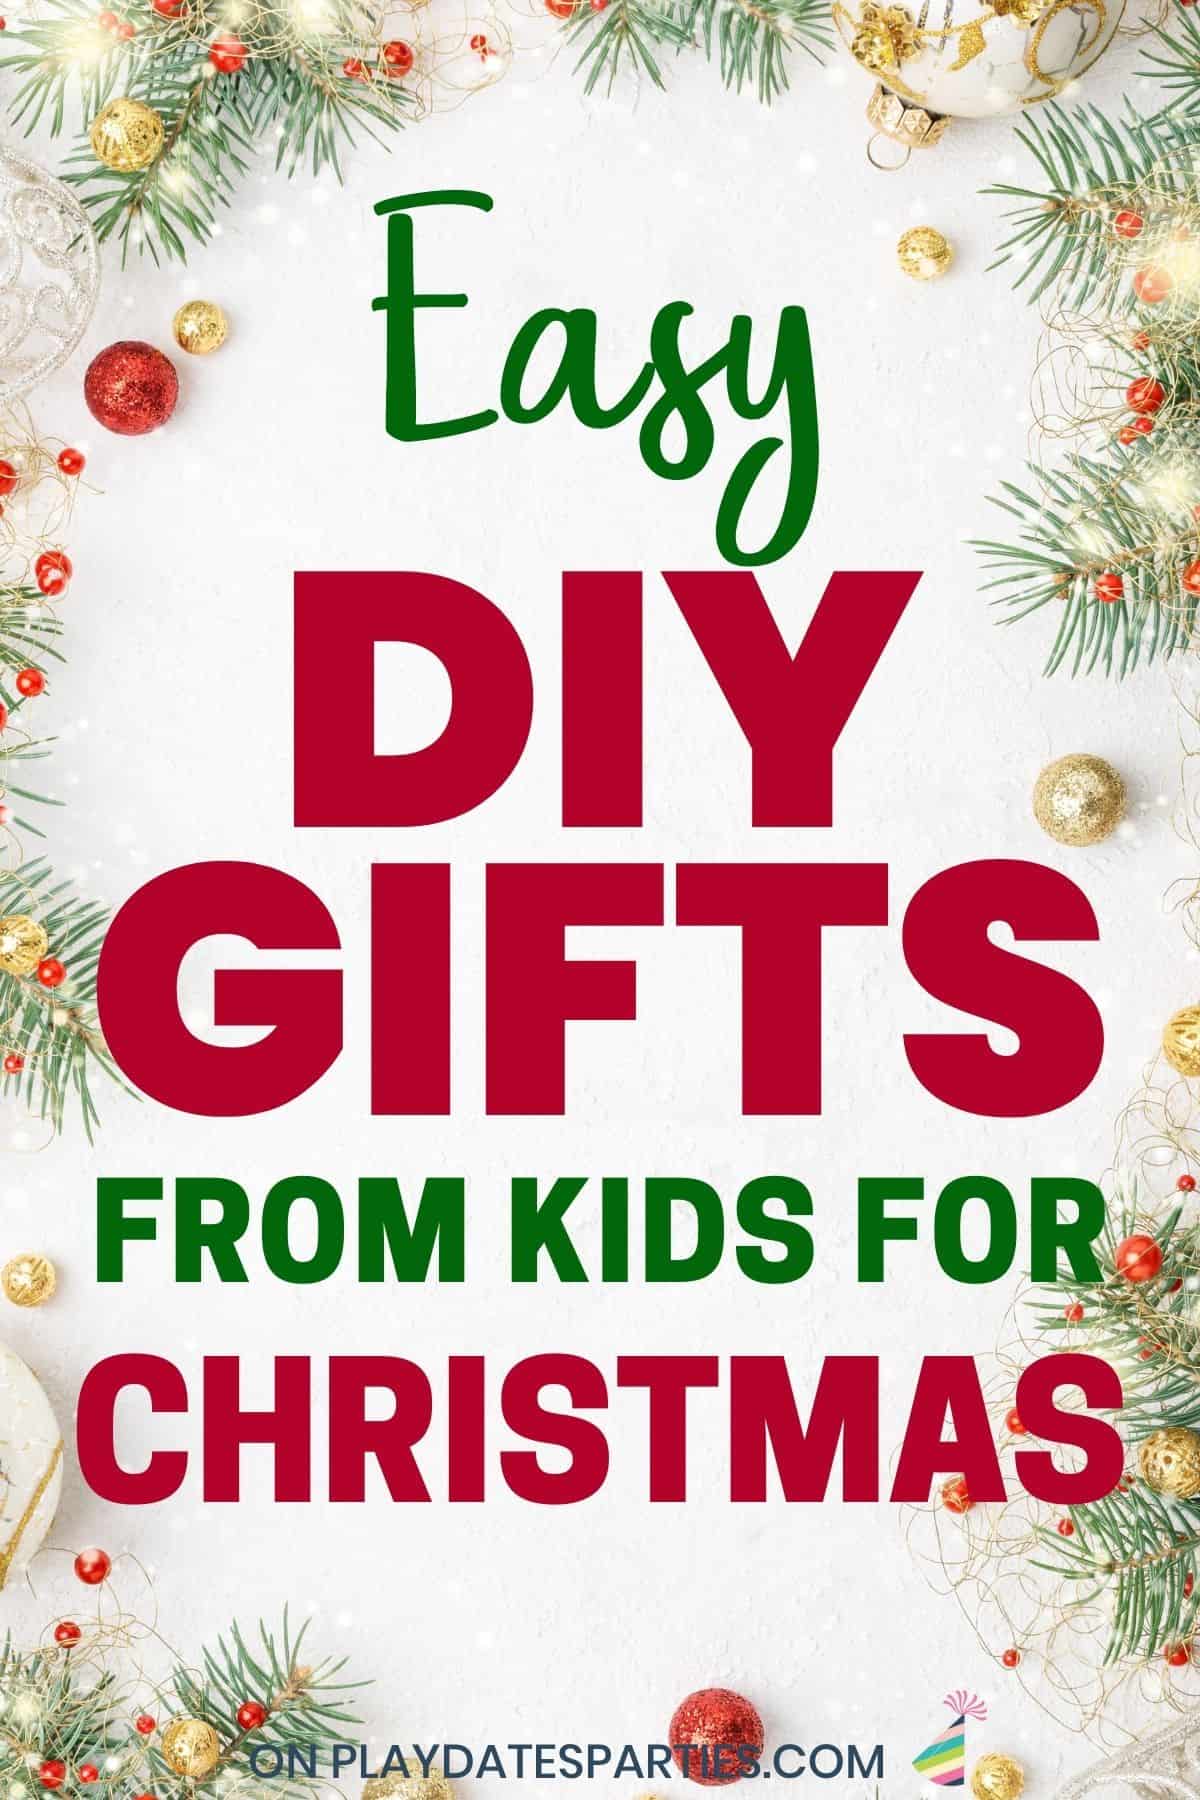 Ten More Gifts Kids Can Make: DIY Christmas Gifts